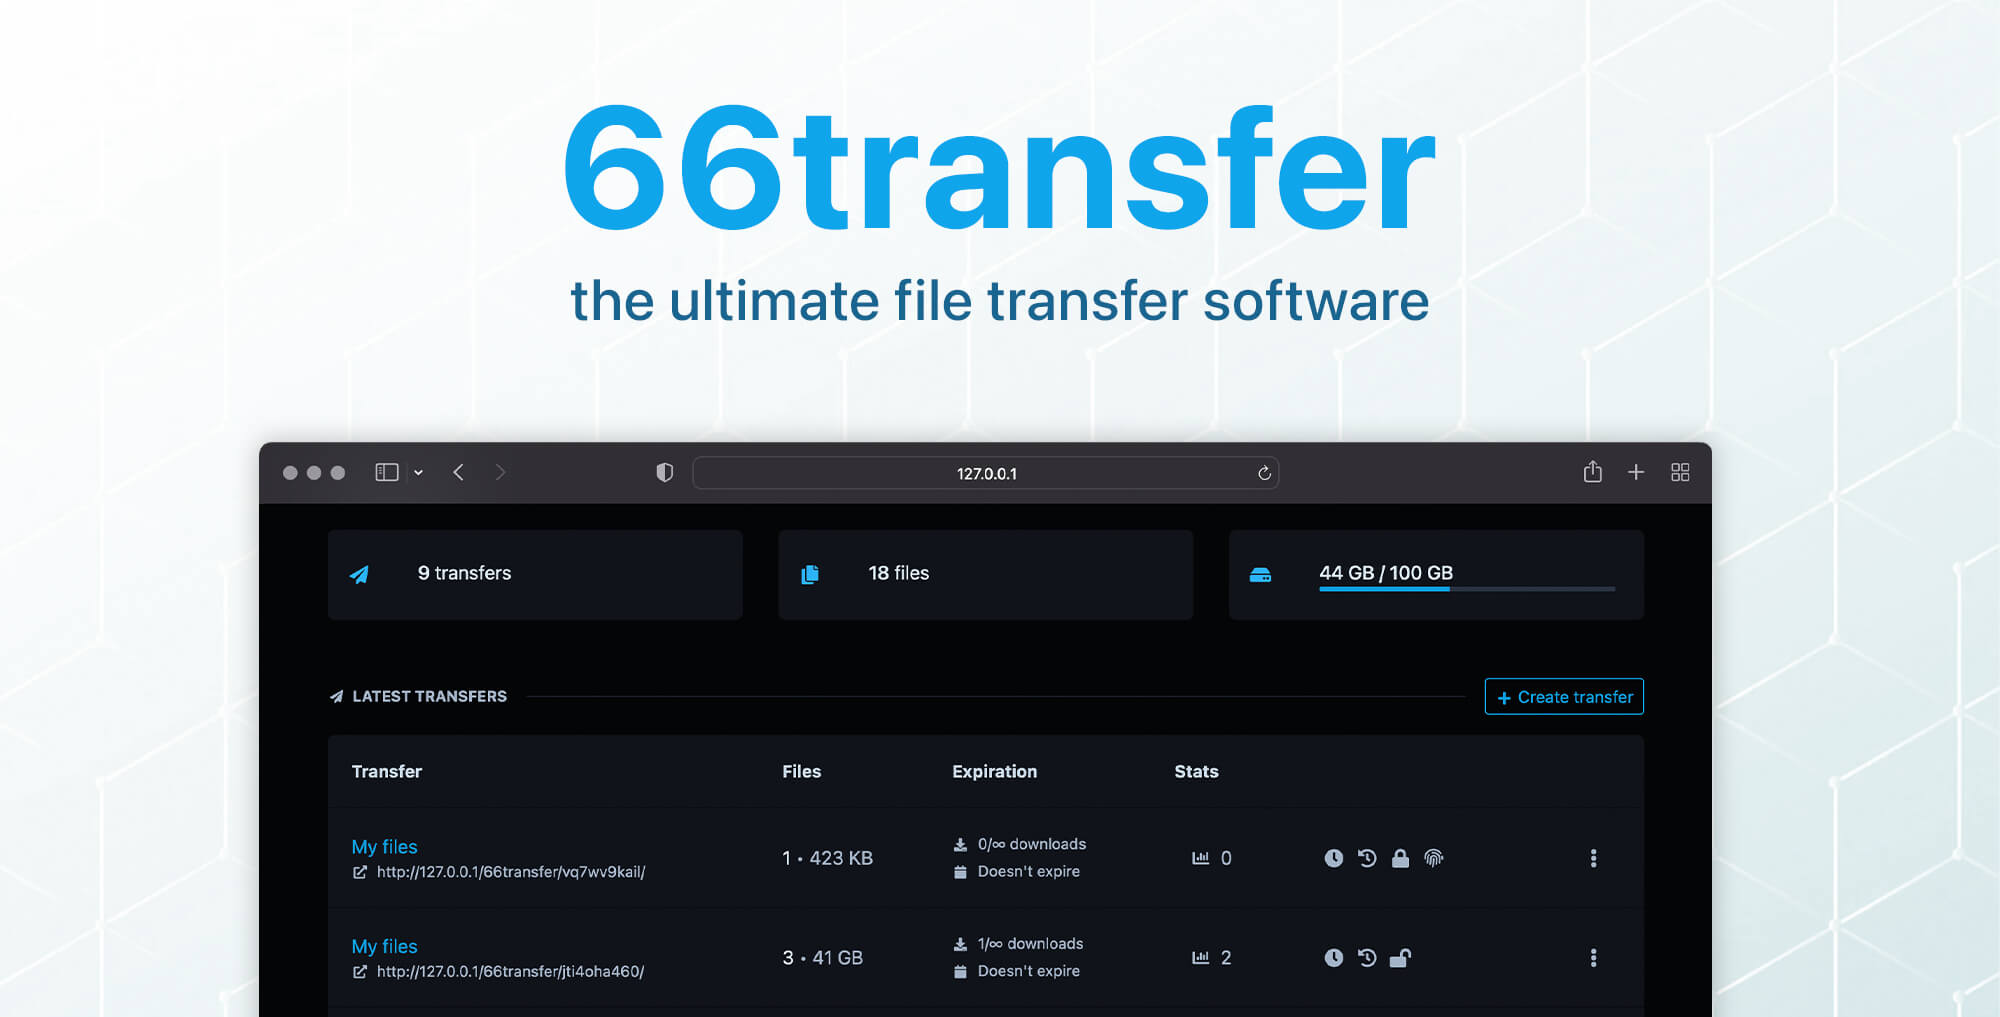 66transfer presentation image